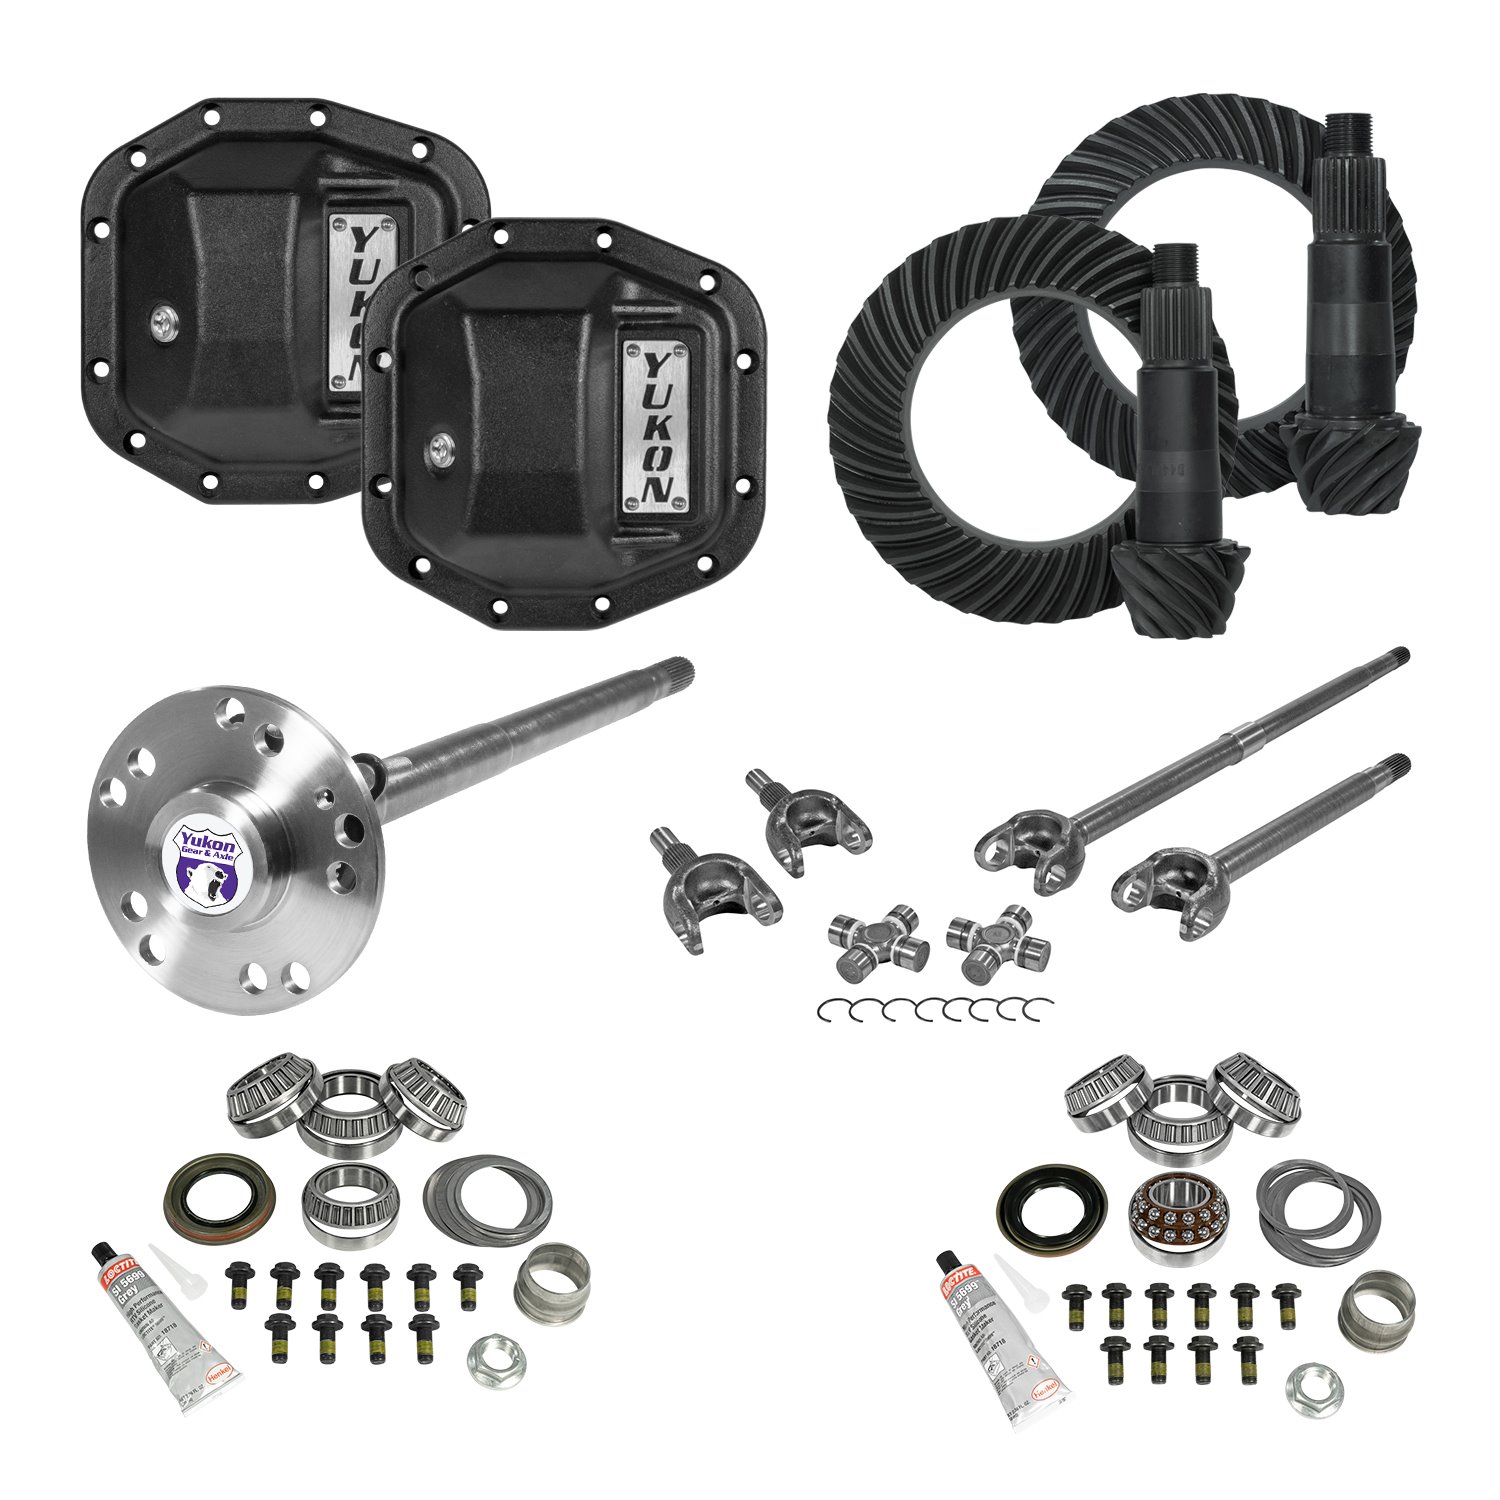 Stage 4 Jeep Jl Re-Gear Kit W/Covers, Fr/Rr Axles, Dana 30/35, 4.11 Ratio